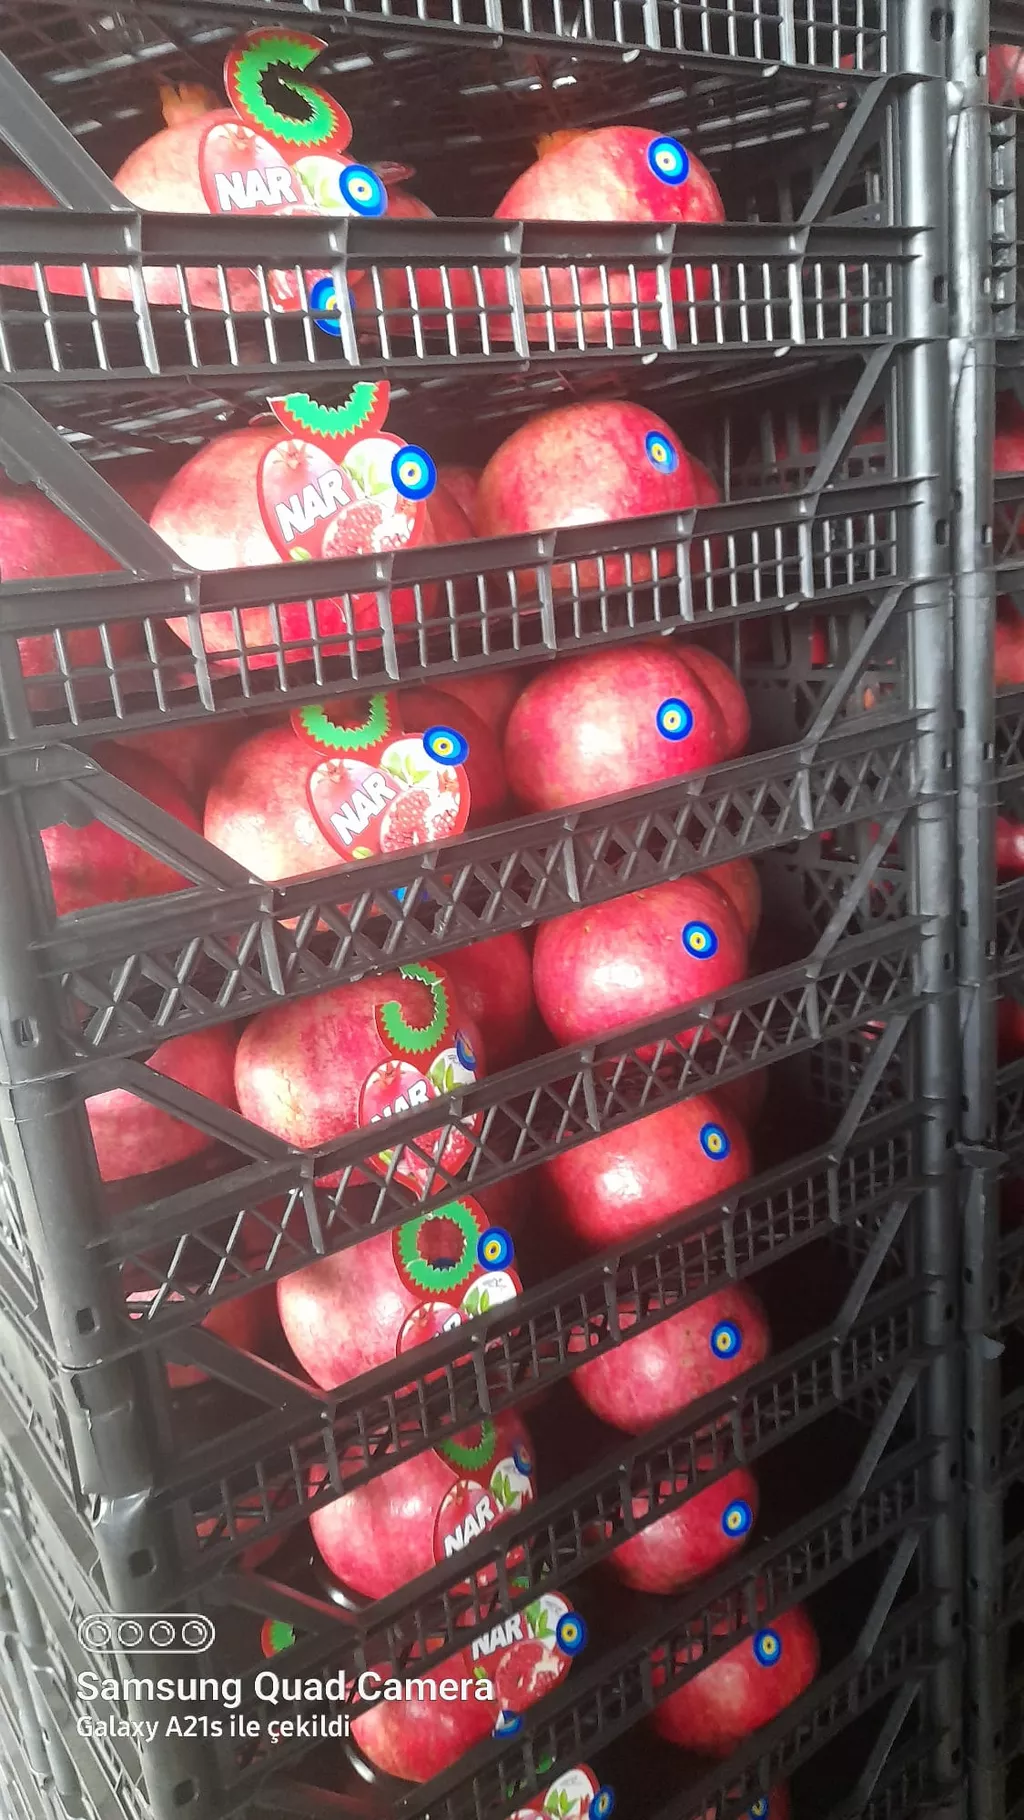 wholesale pomegranate sales  в Турции 3